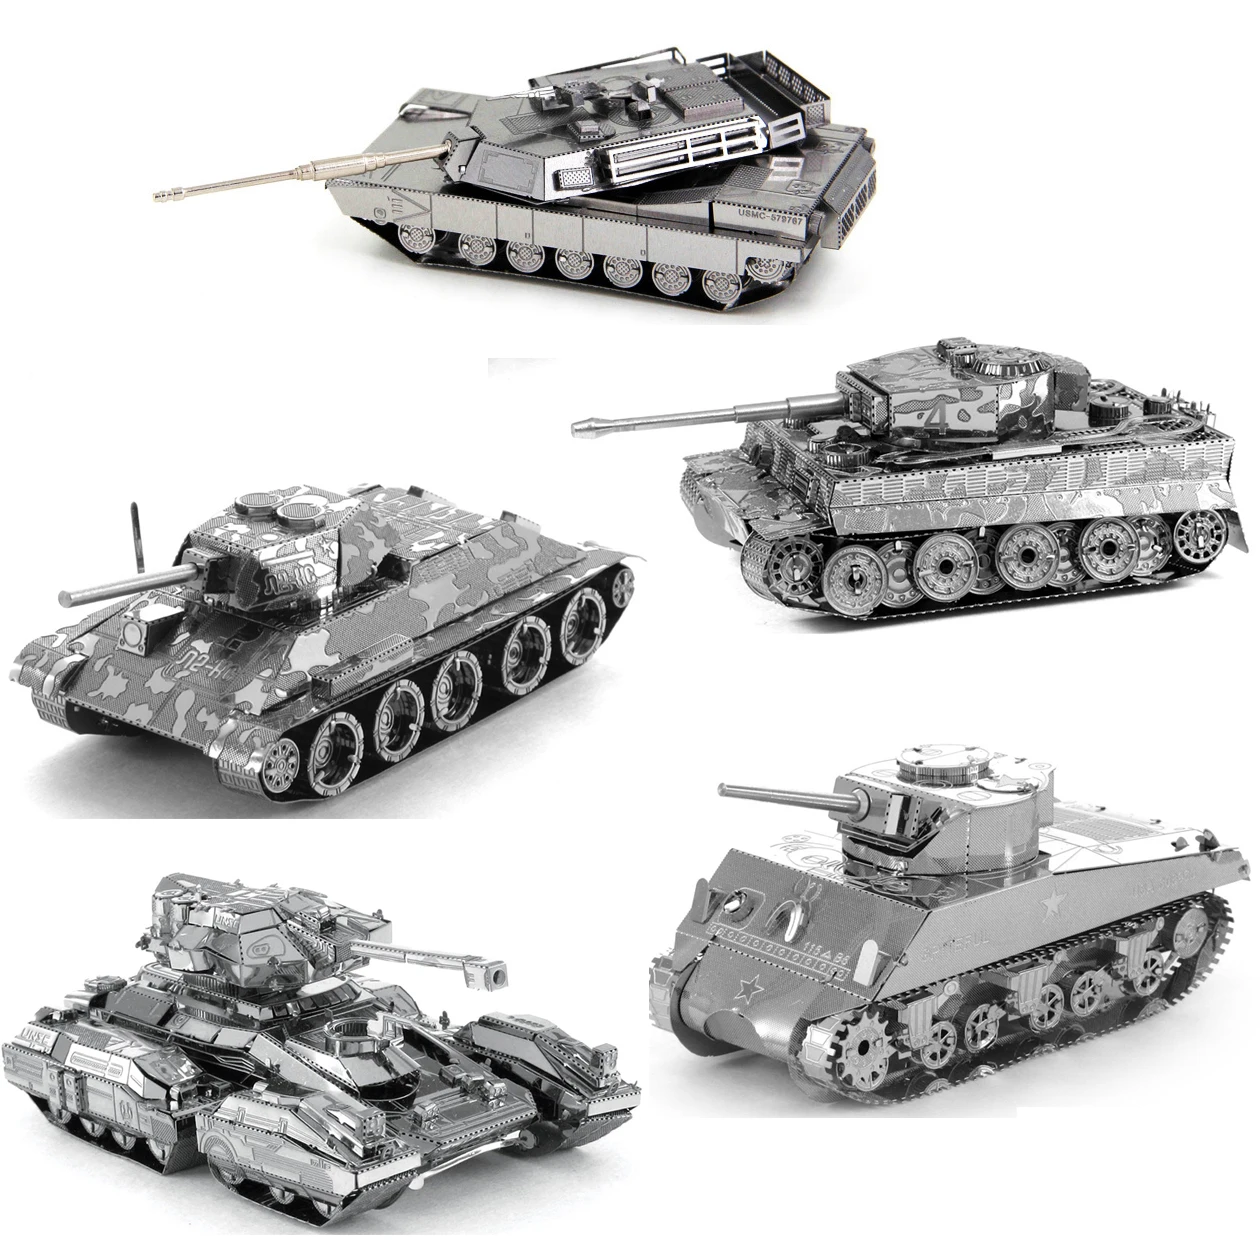 

Tank 3D Metal Puzzle Chieftain Tank MK50 chi-ha tank M1 Abrams Tank model KITS Assemble Jigsaw Puzzle Gift Toys For Children